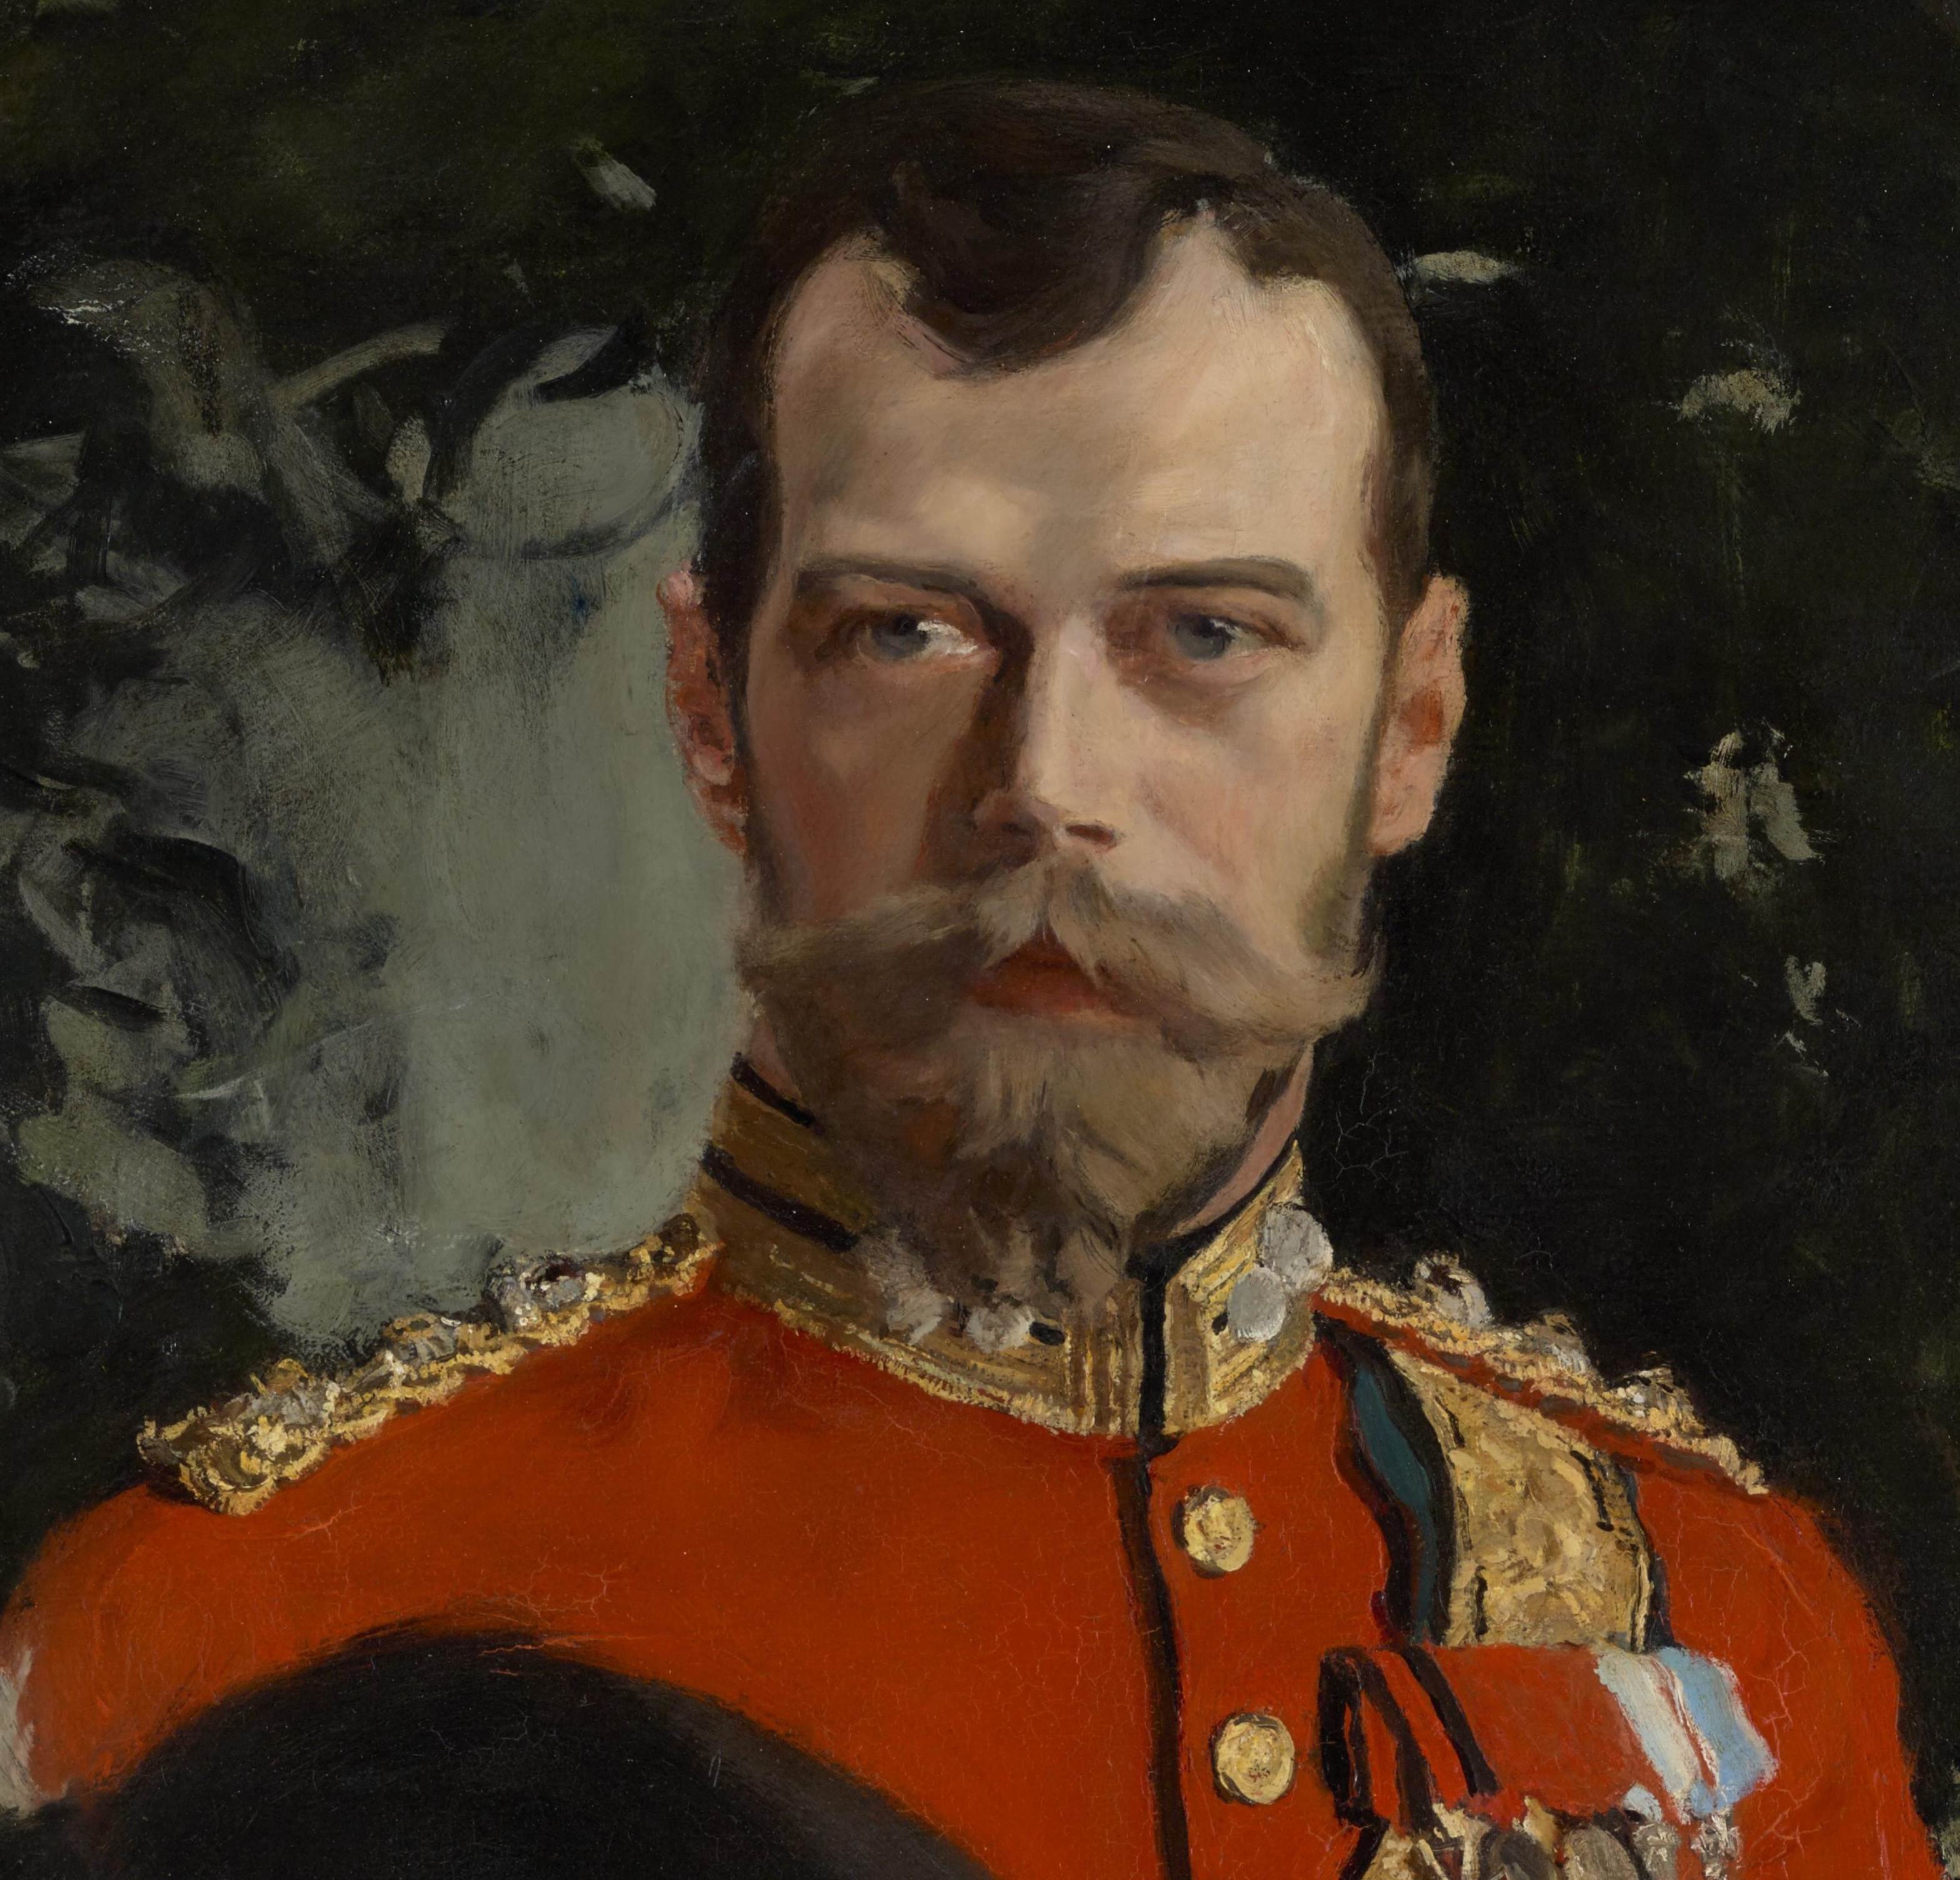 俄国沙皇尼古拉二世亚历山德罗维奇陛下画像portraitofhisimperial